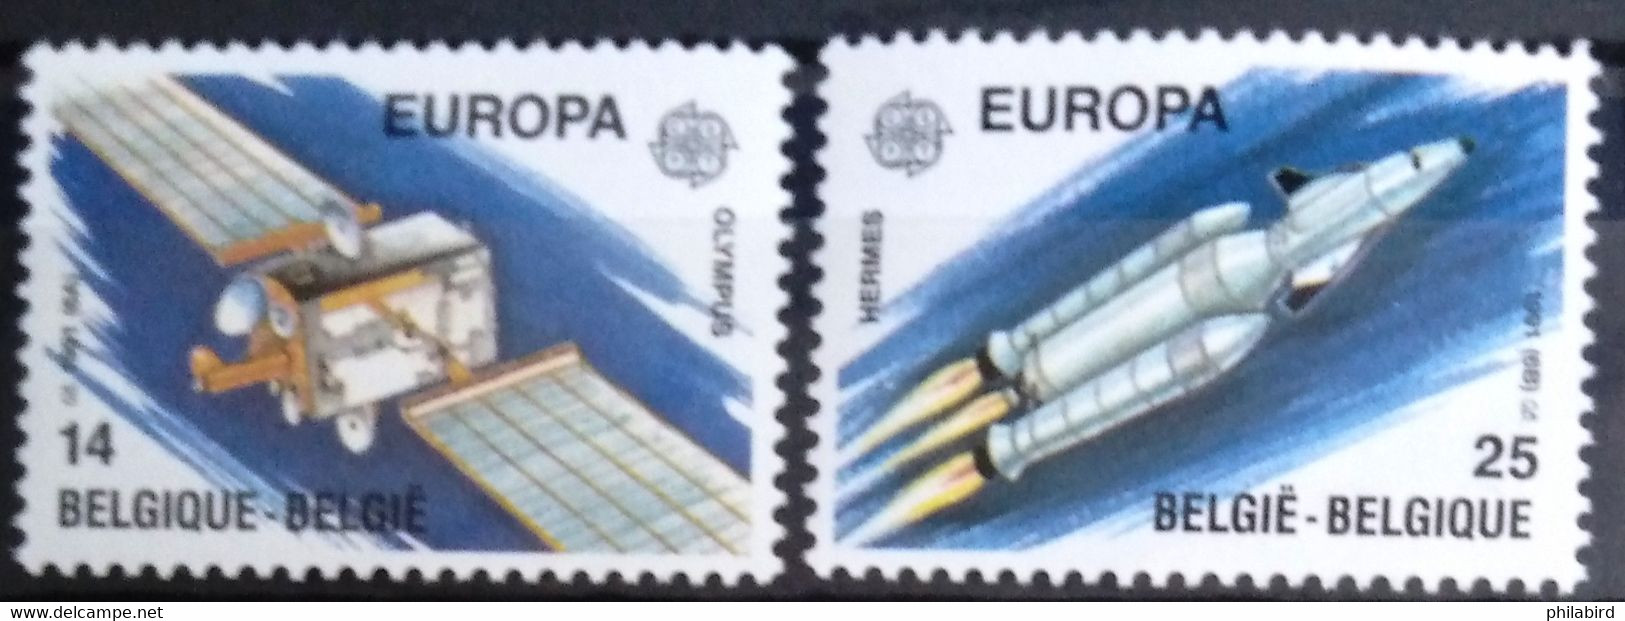 EUROPA 1991 - BELGIQUE                    N° 2406/2407                        NEUF** - 1991